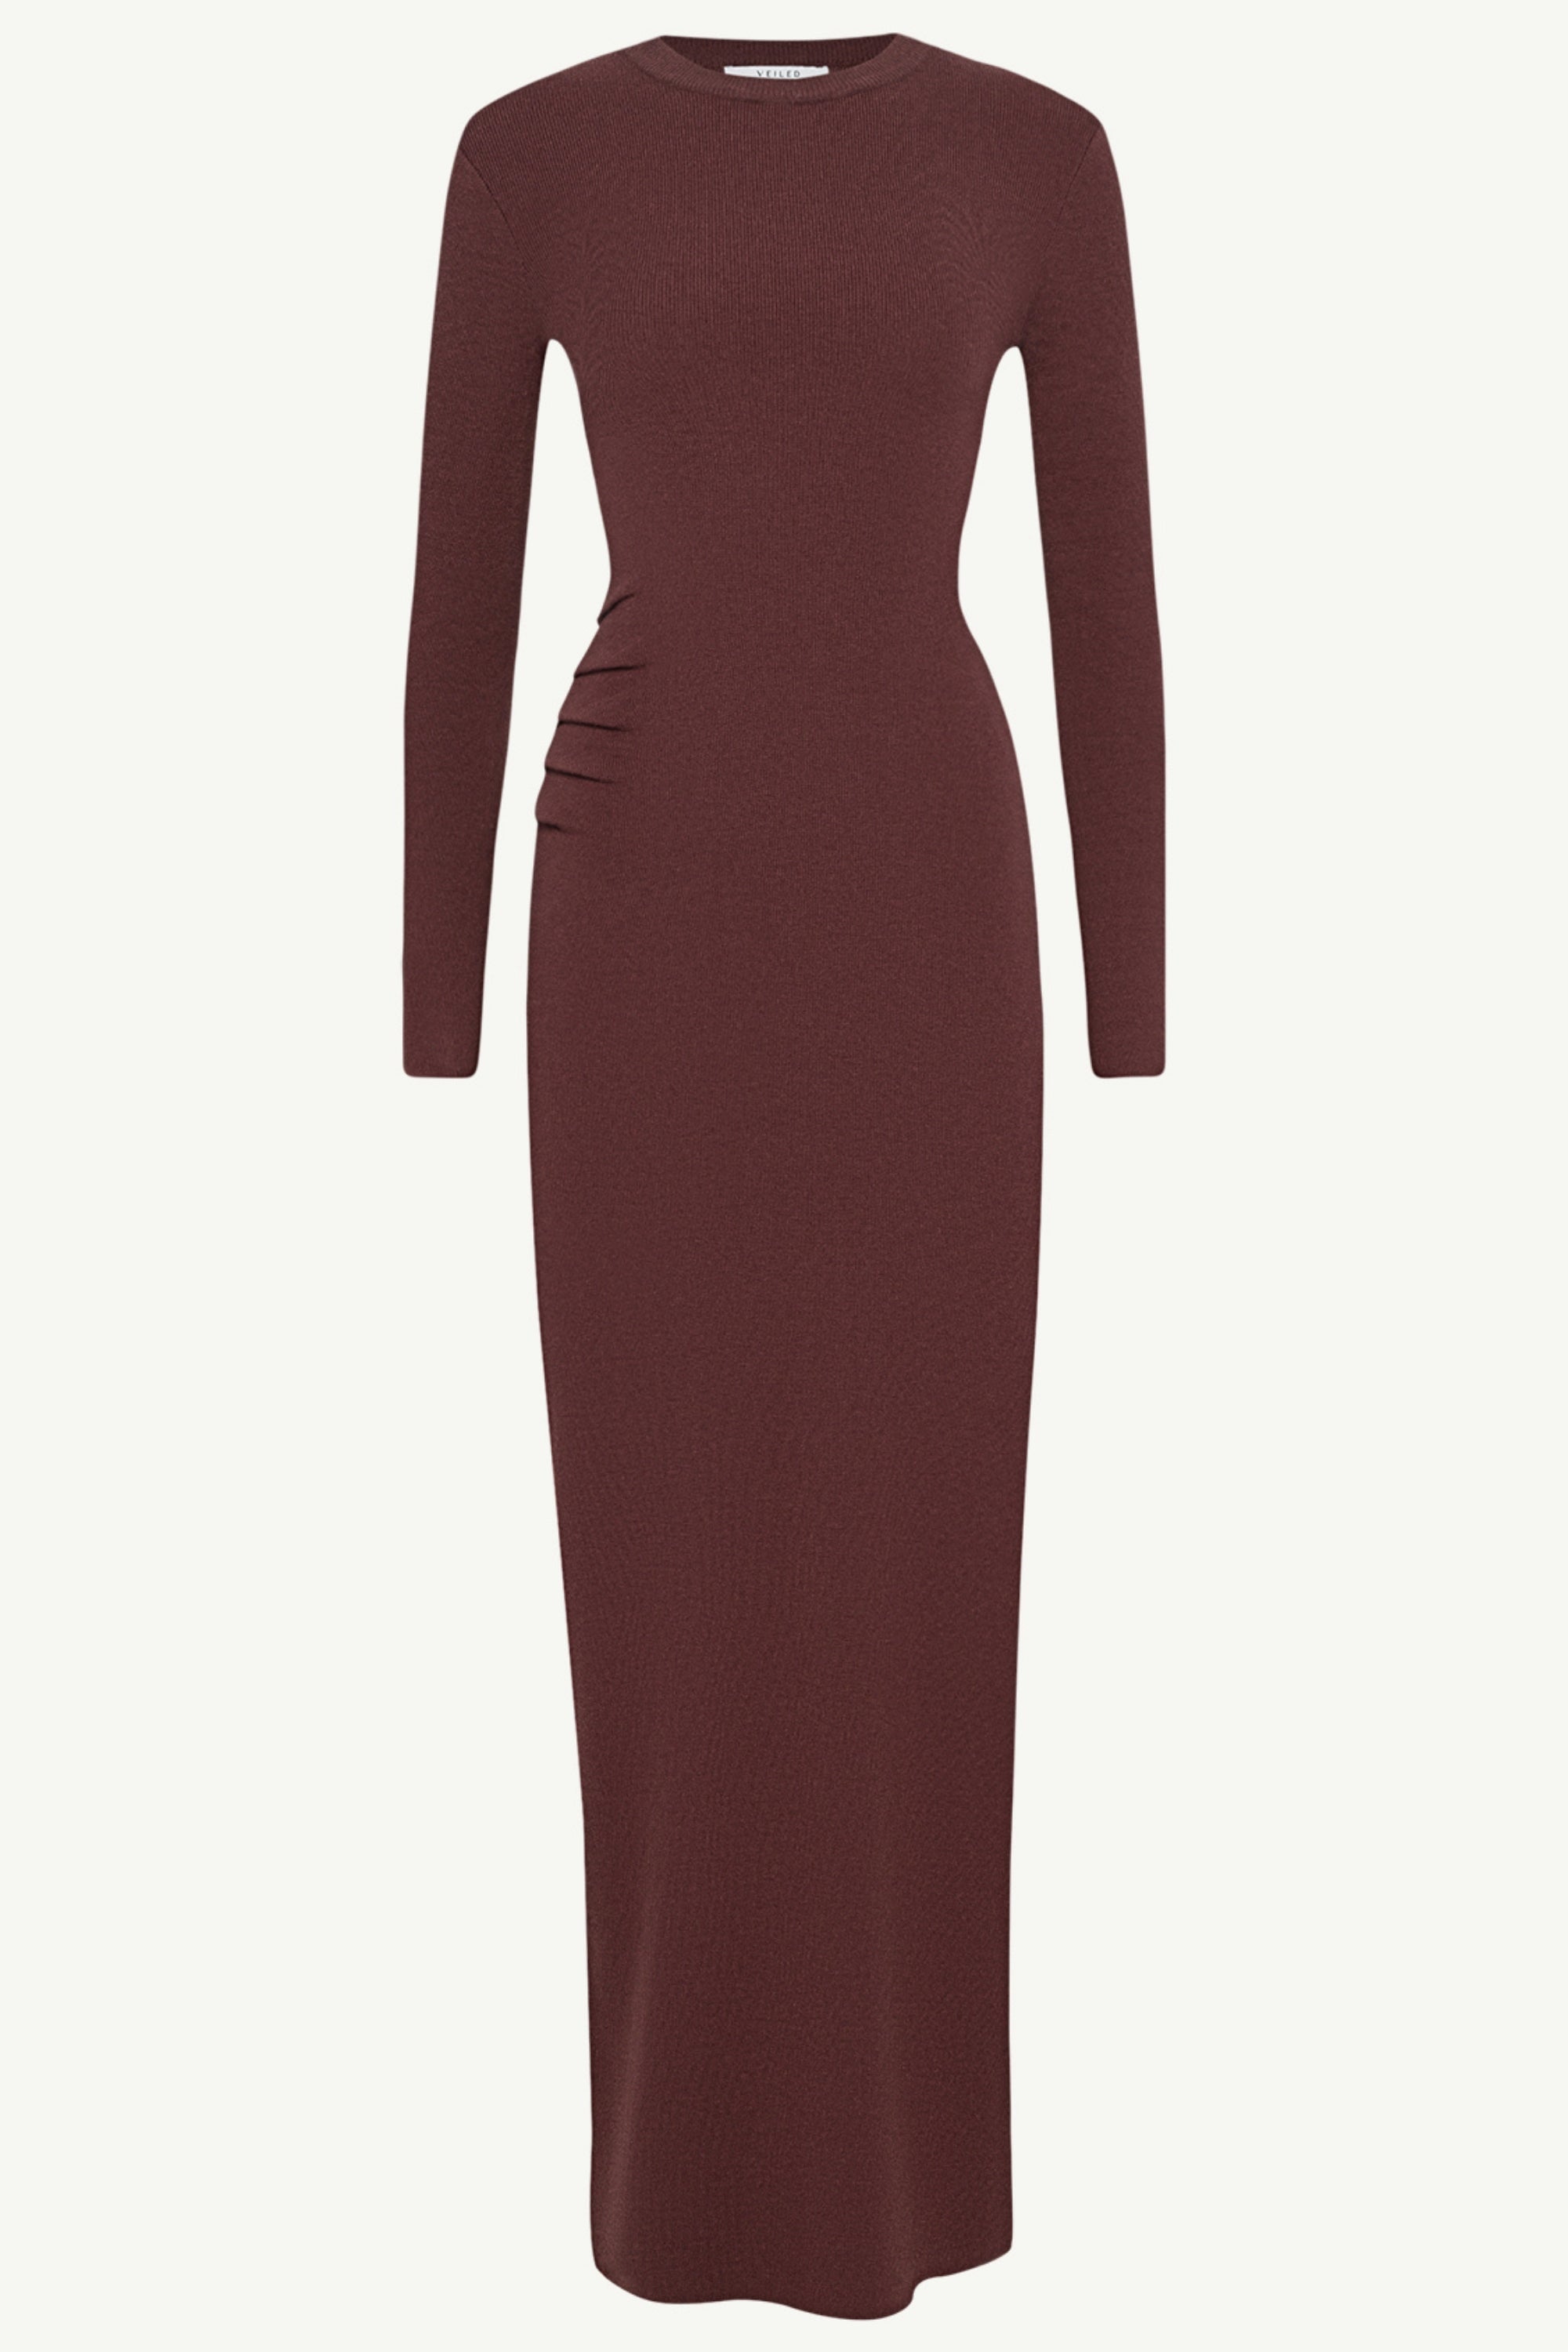 Abigail Rouched Knit Maxi Dress - Dark Brown Clothing saigonodysseyhotel 